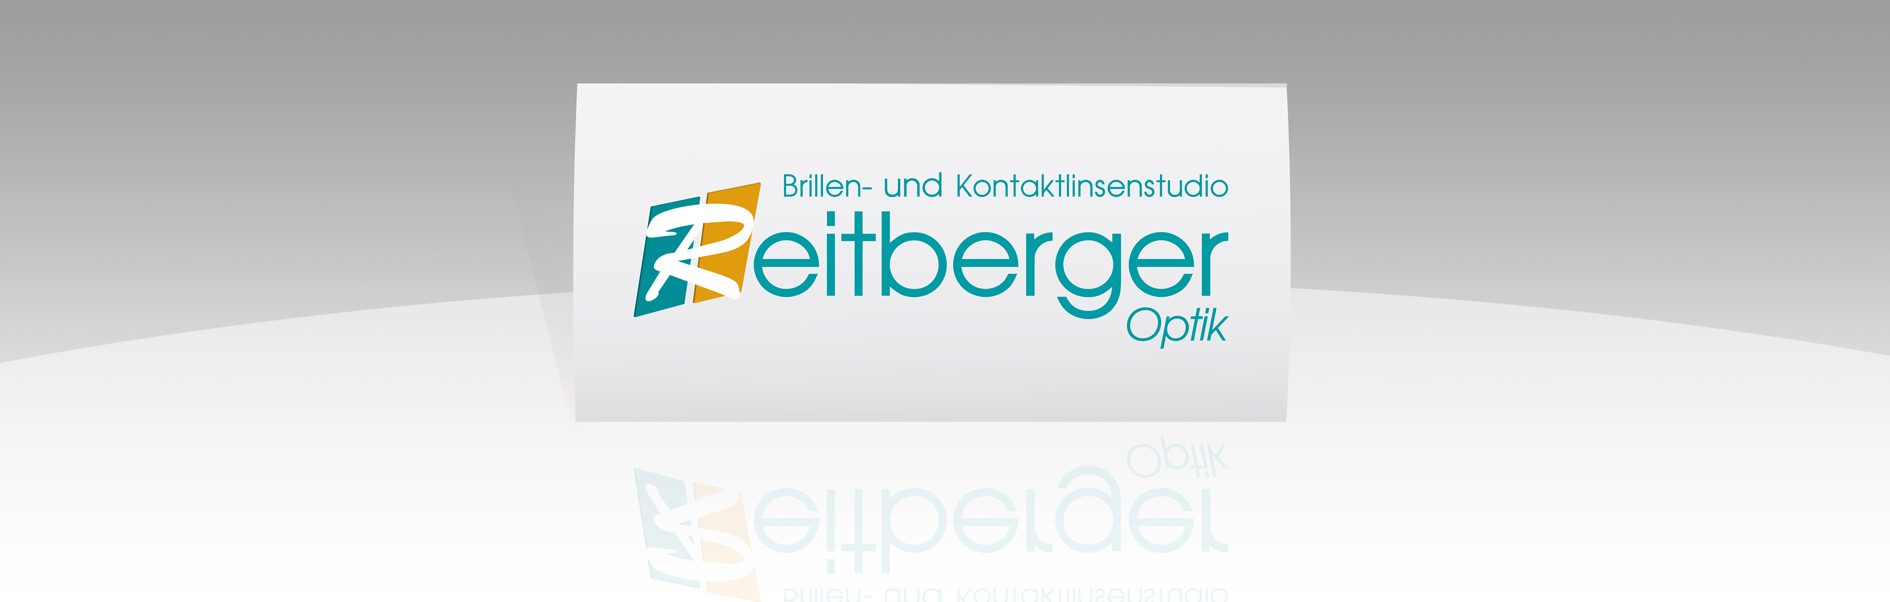 Hier ist das Reitberger Optik Logo abgebildet.